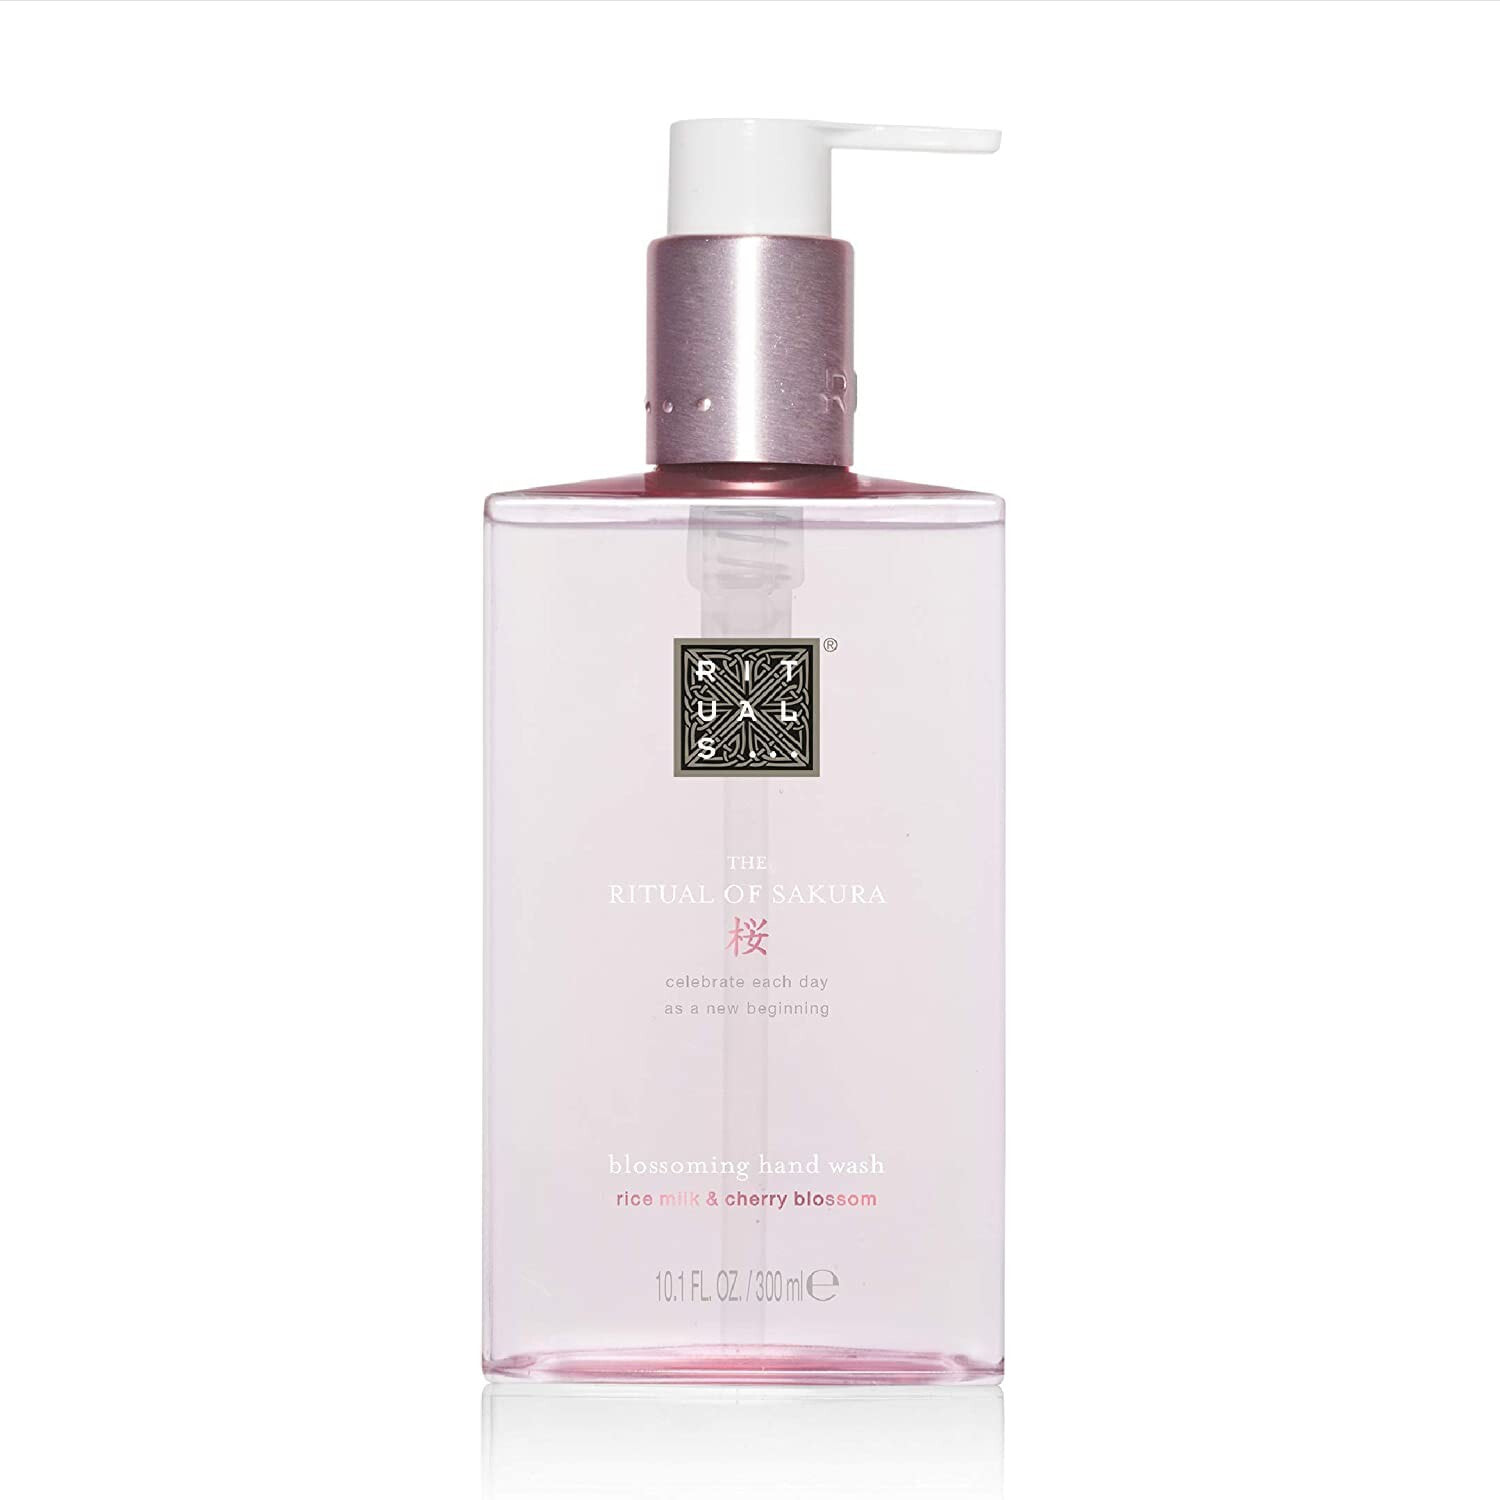 RITUALS The Ritual of Sakura Hand Soap Refill 600ml - Rice Milk & Cherry Blossom - Skin Care & Skin Renewing Properties